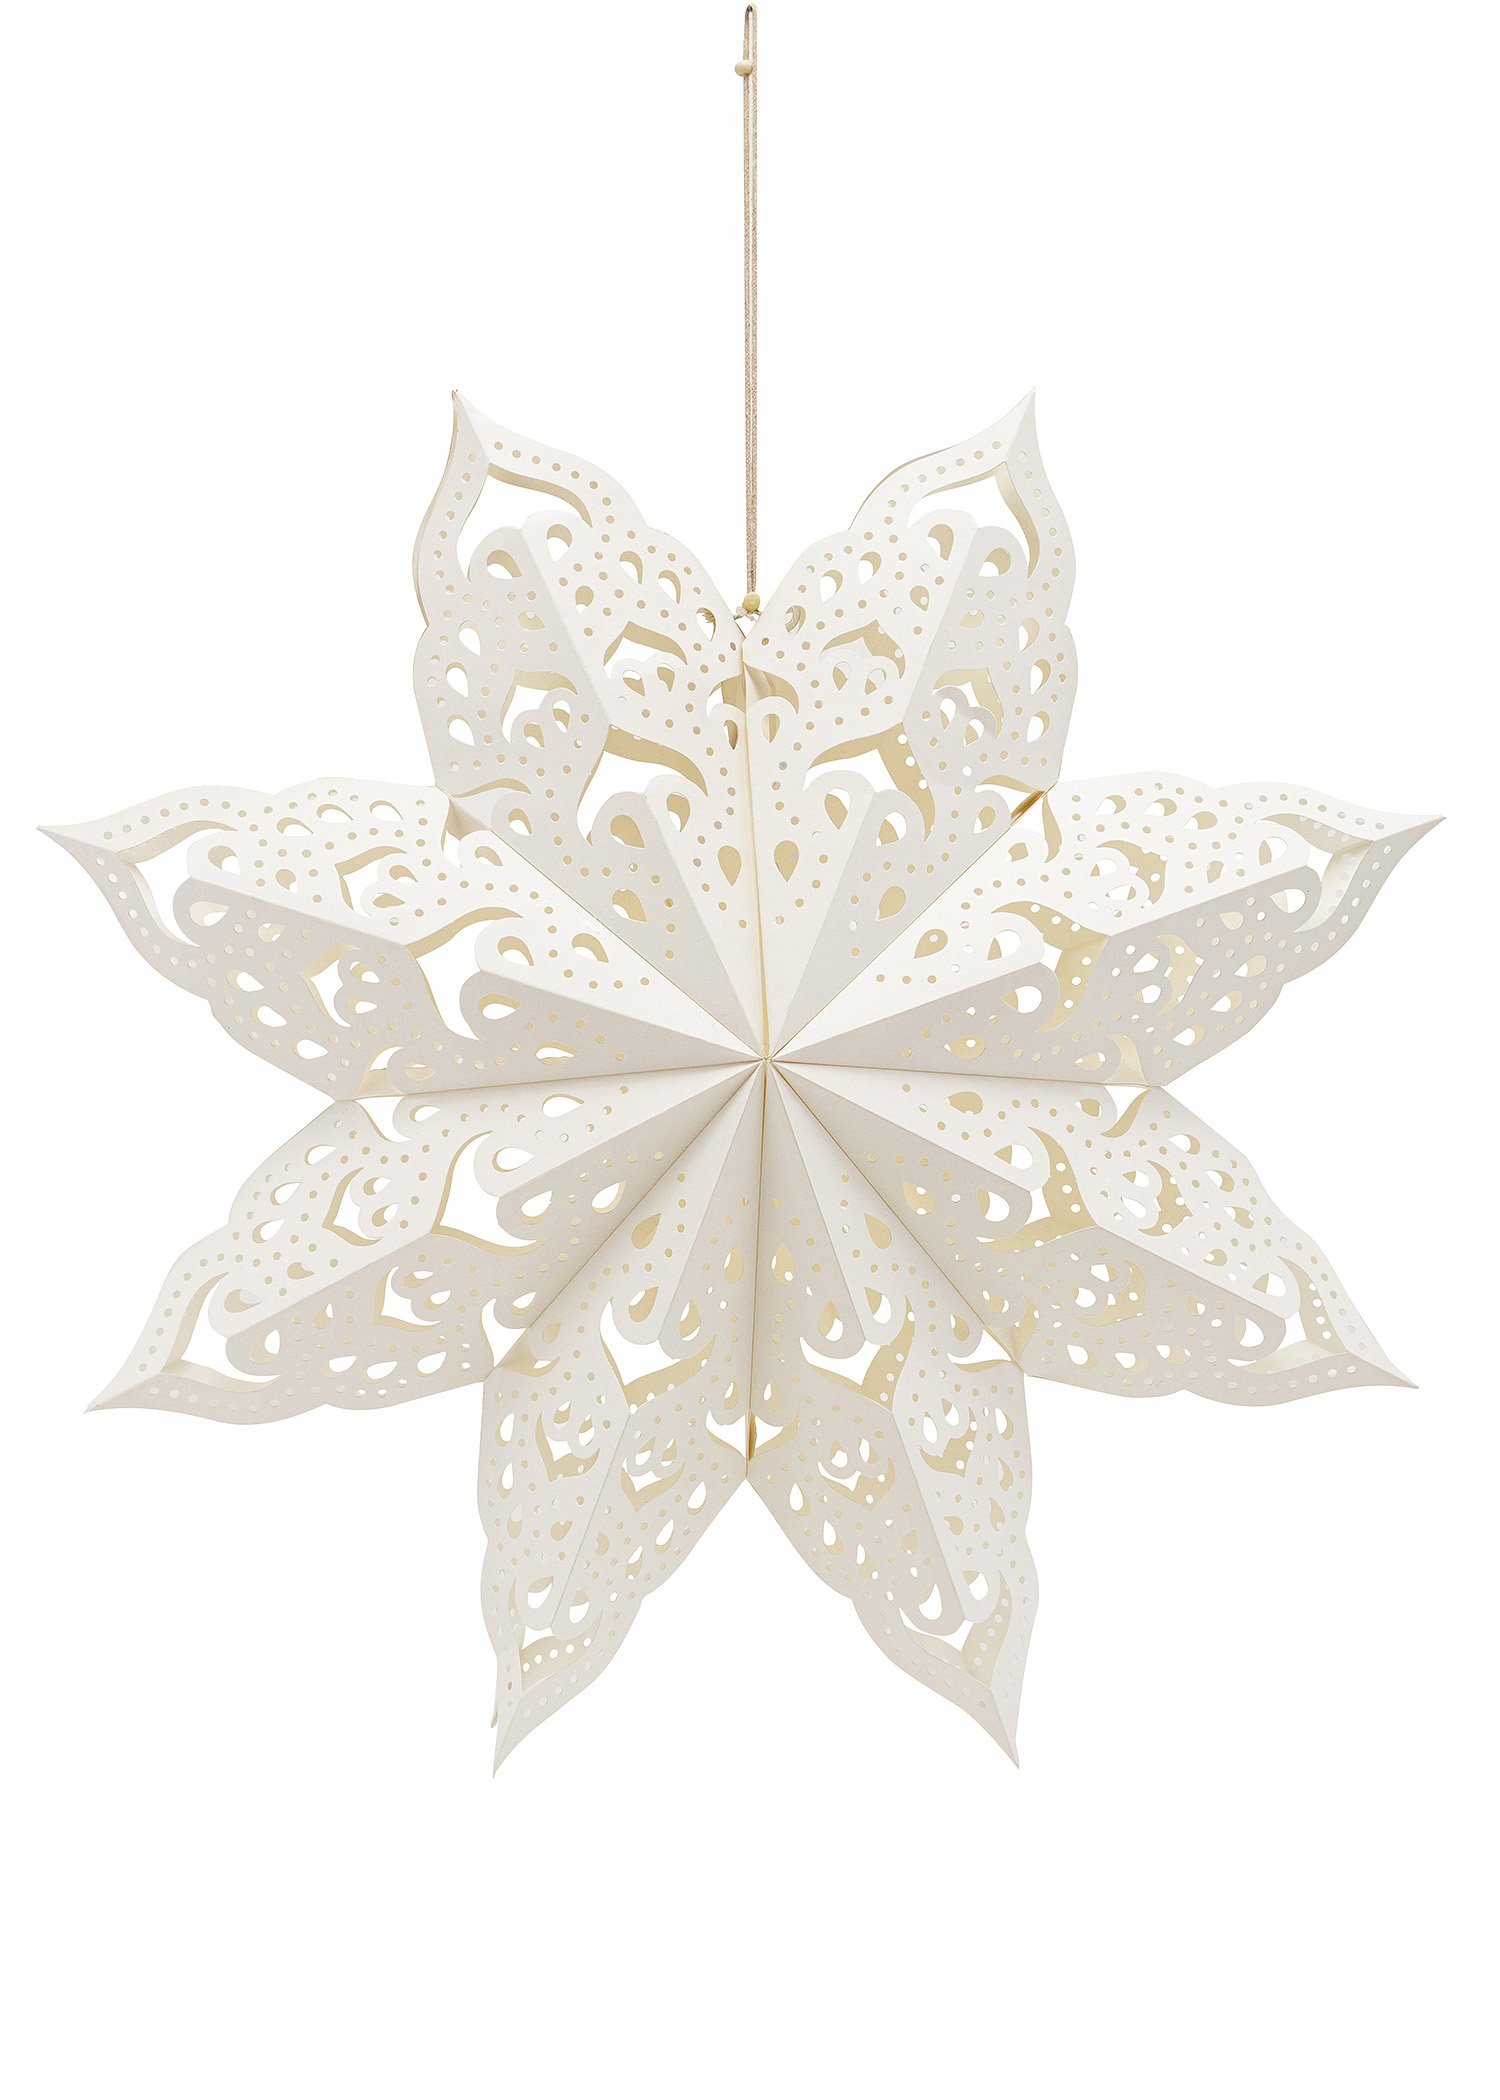 White Christmas lampshade